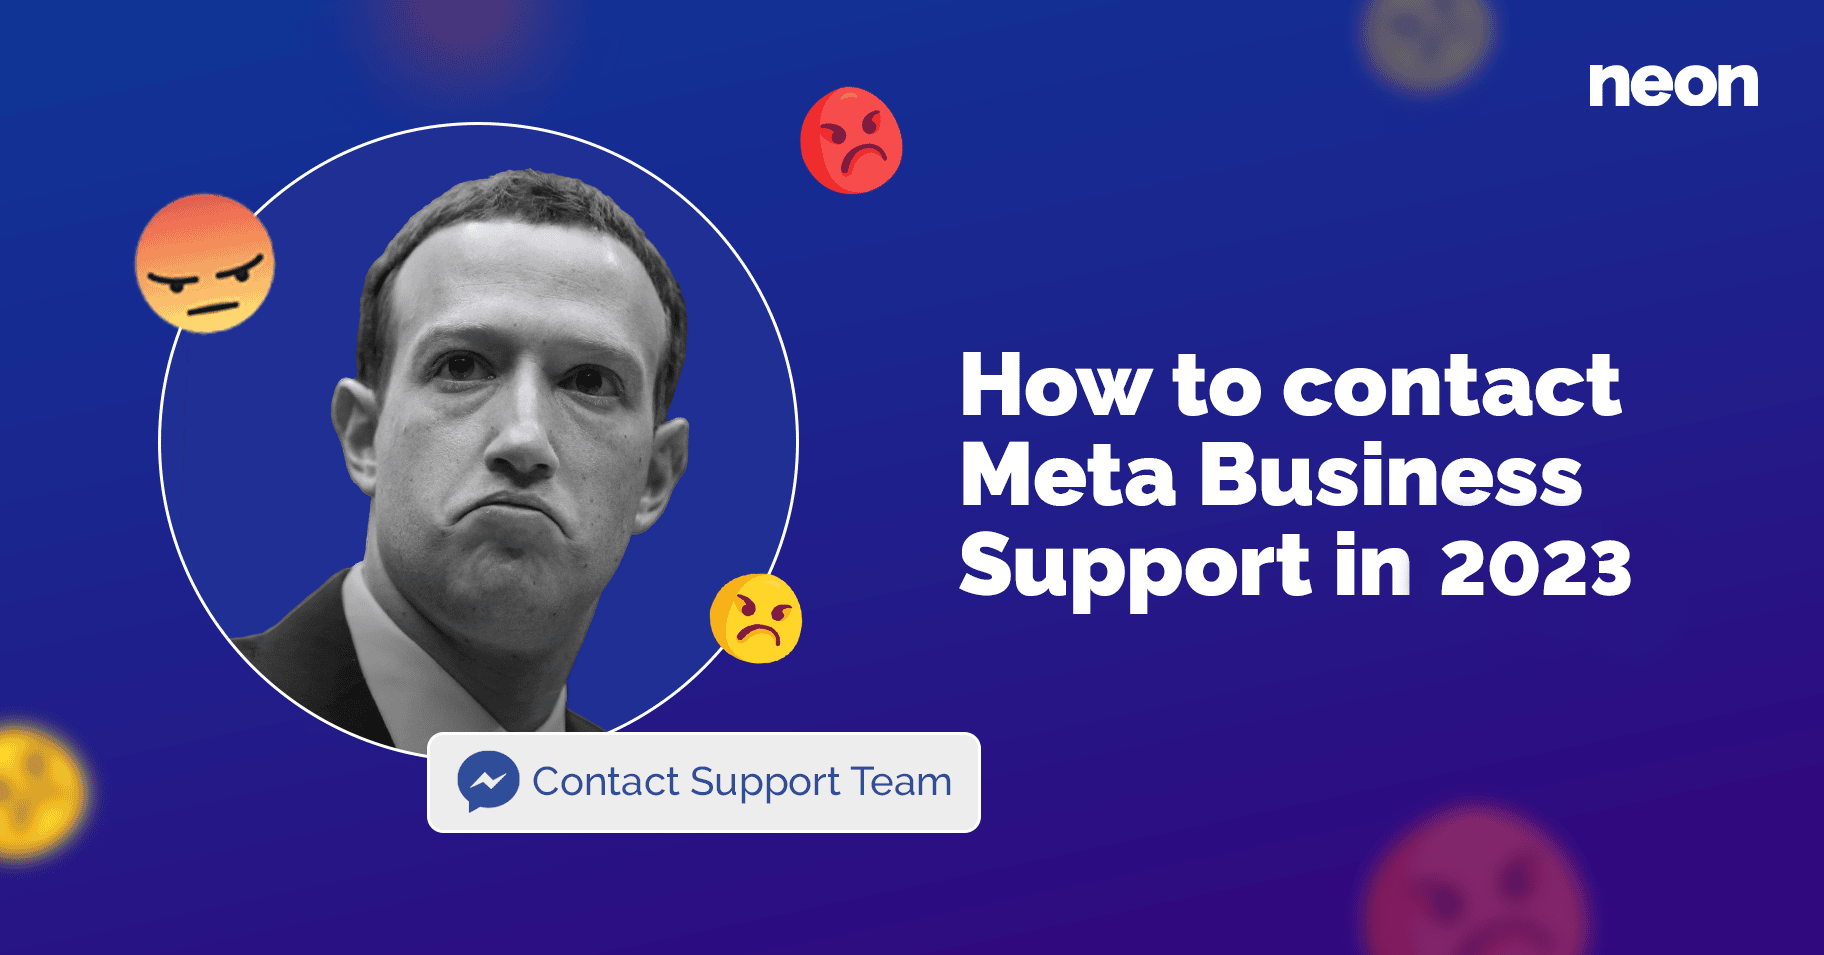 Facebook Meta Business Suite Not Working  Facebook Meta Suite Solution? 